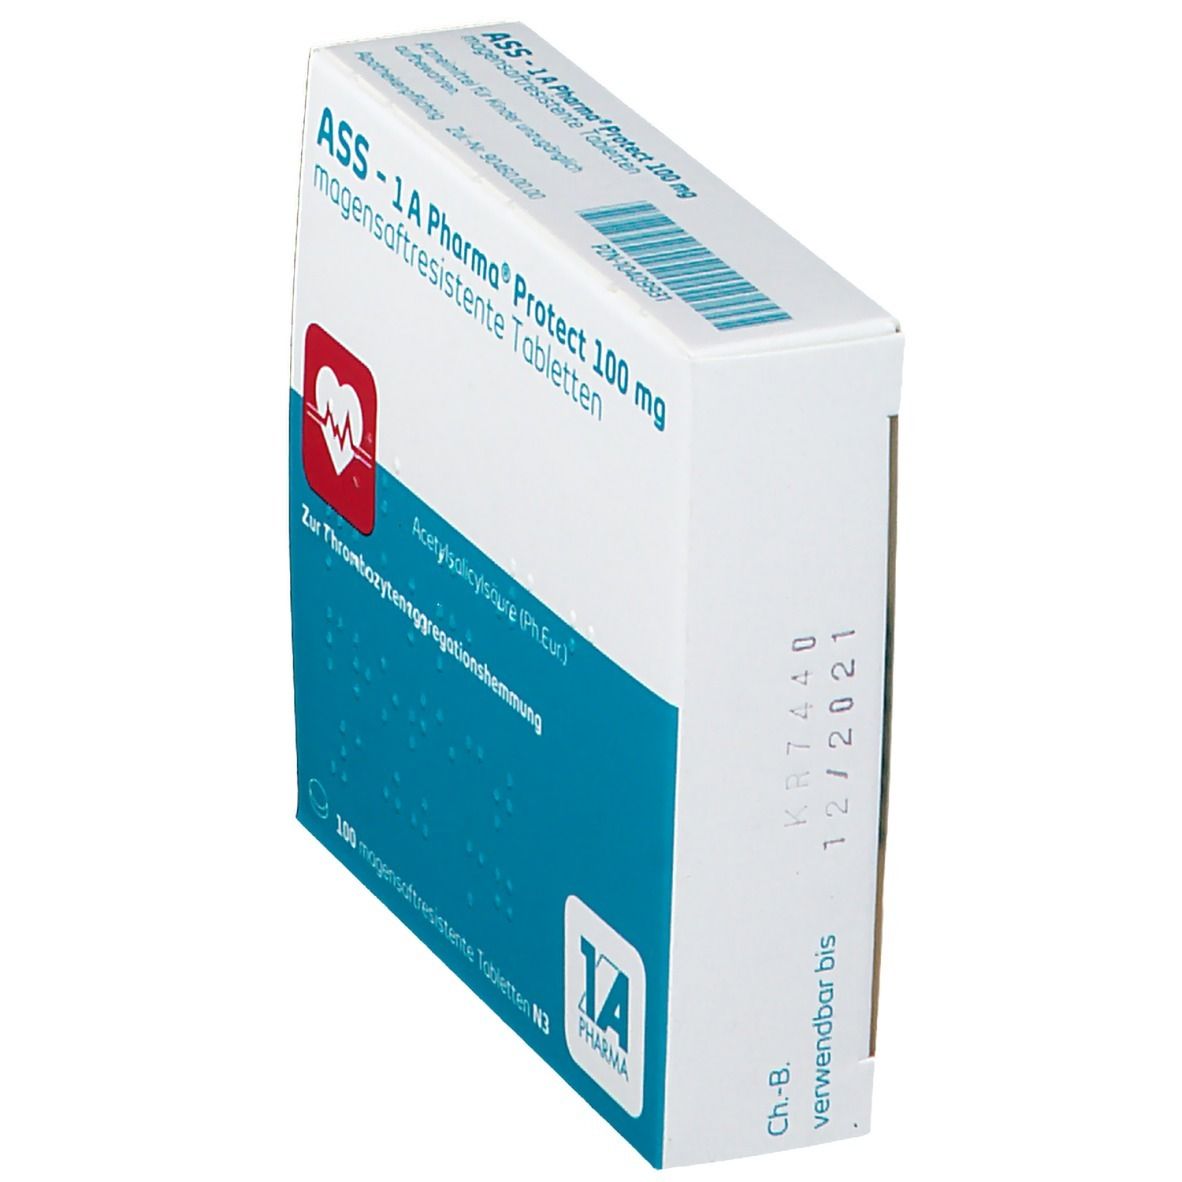 ASS-1A Pharma® Protect 100 mg